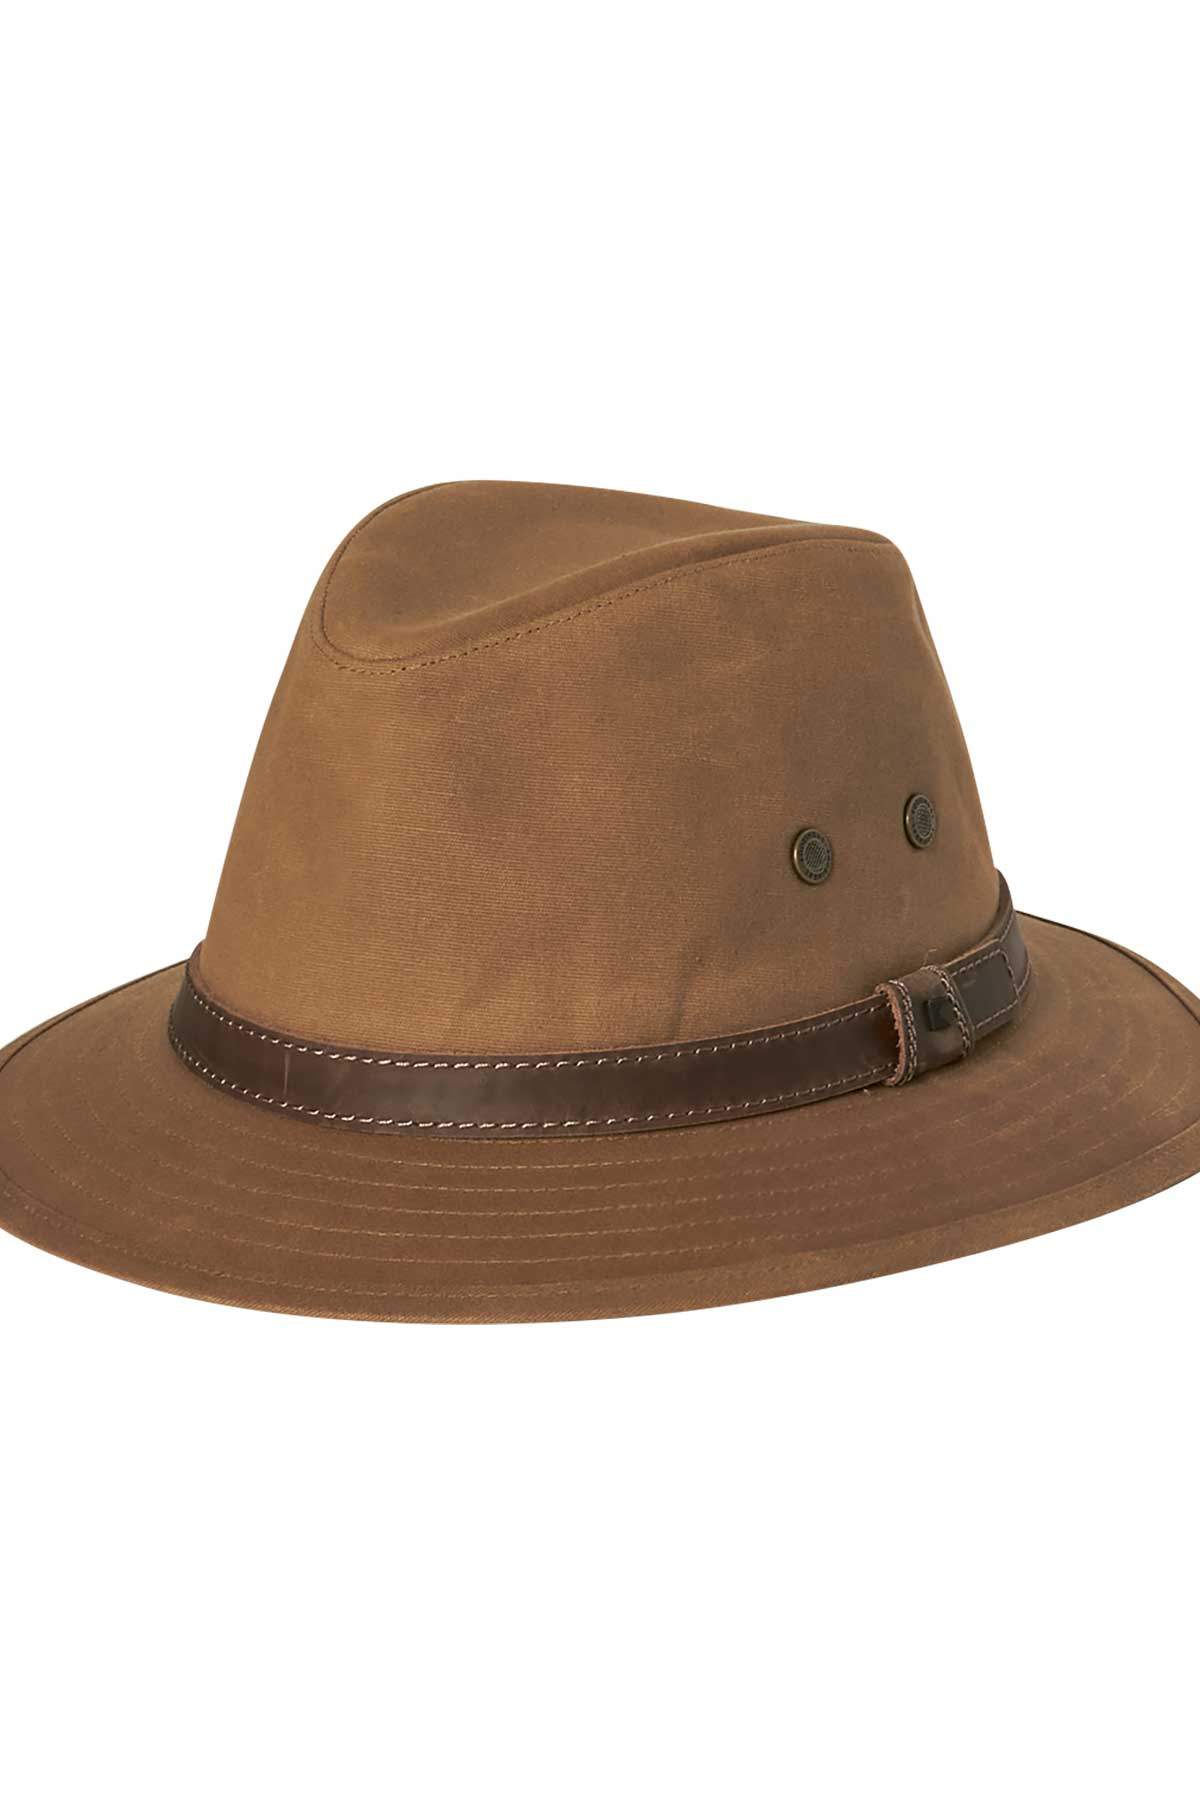 Kooringal safari hat ridge tan